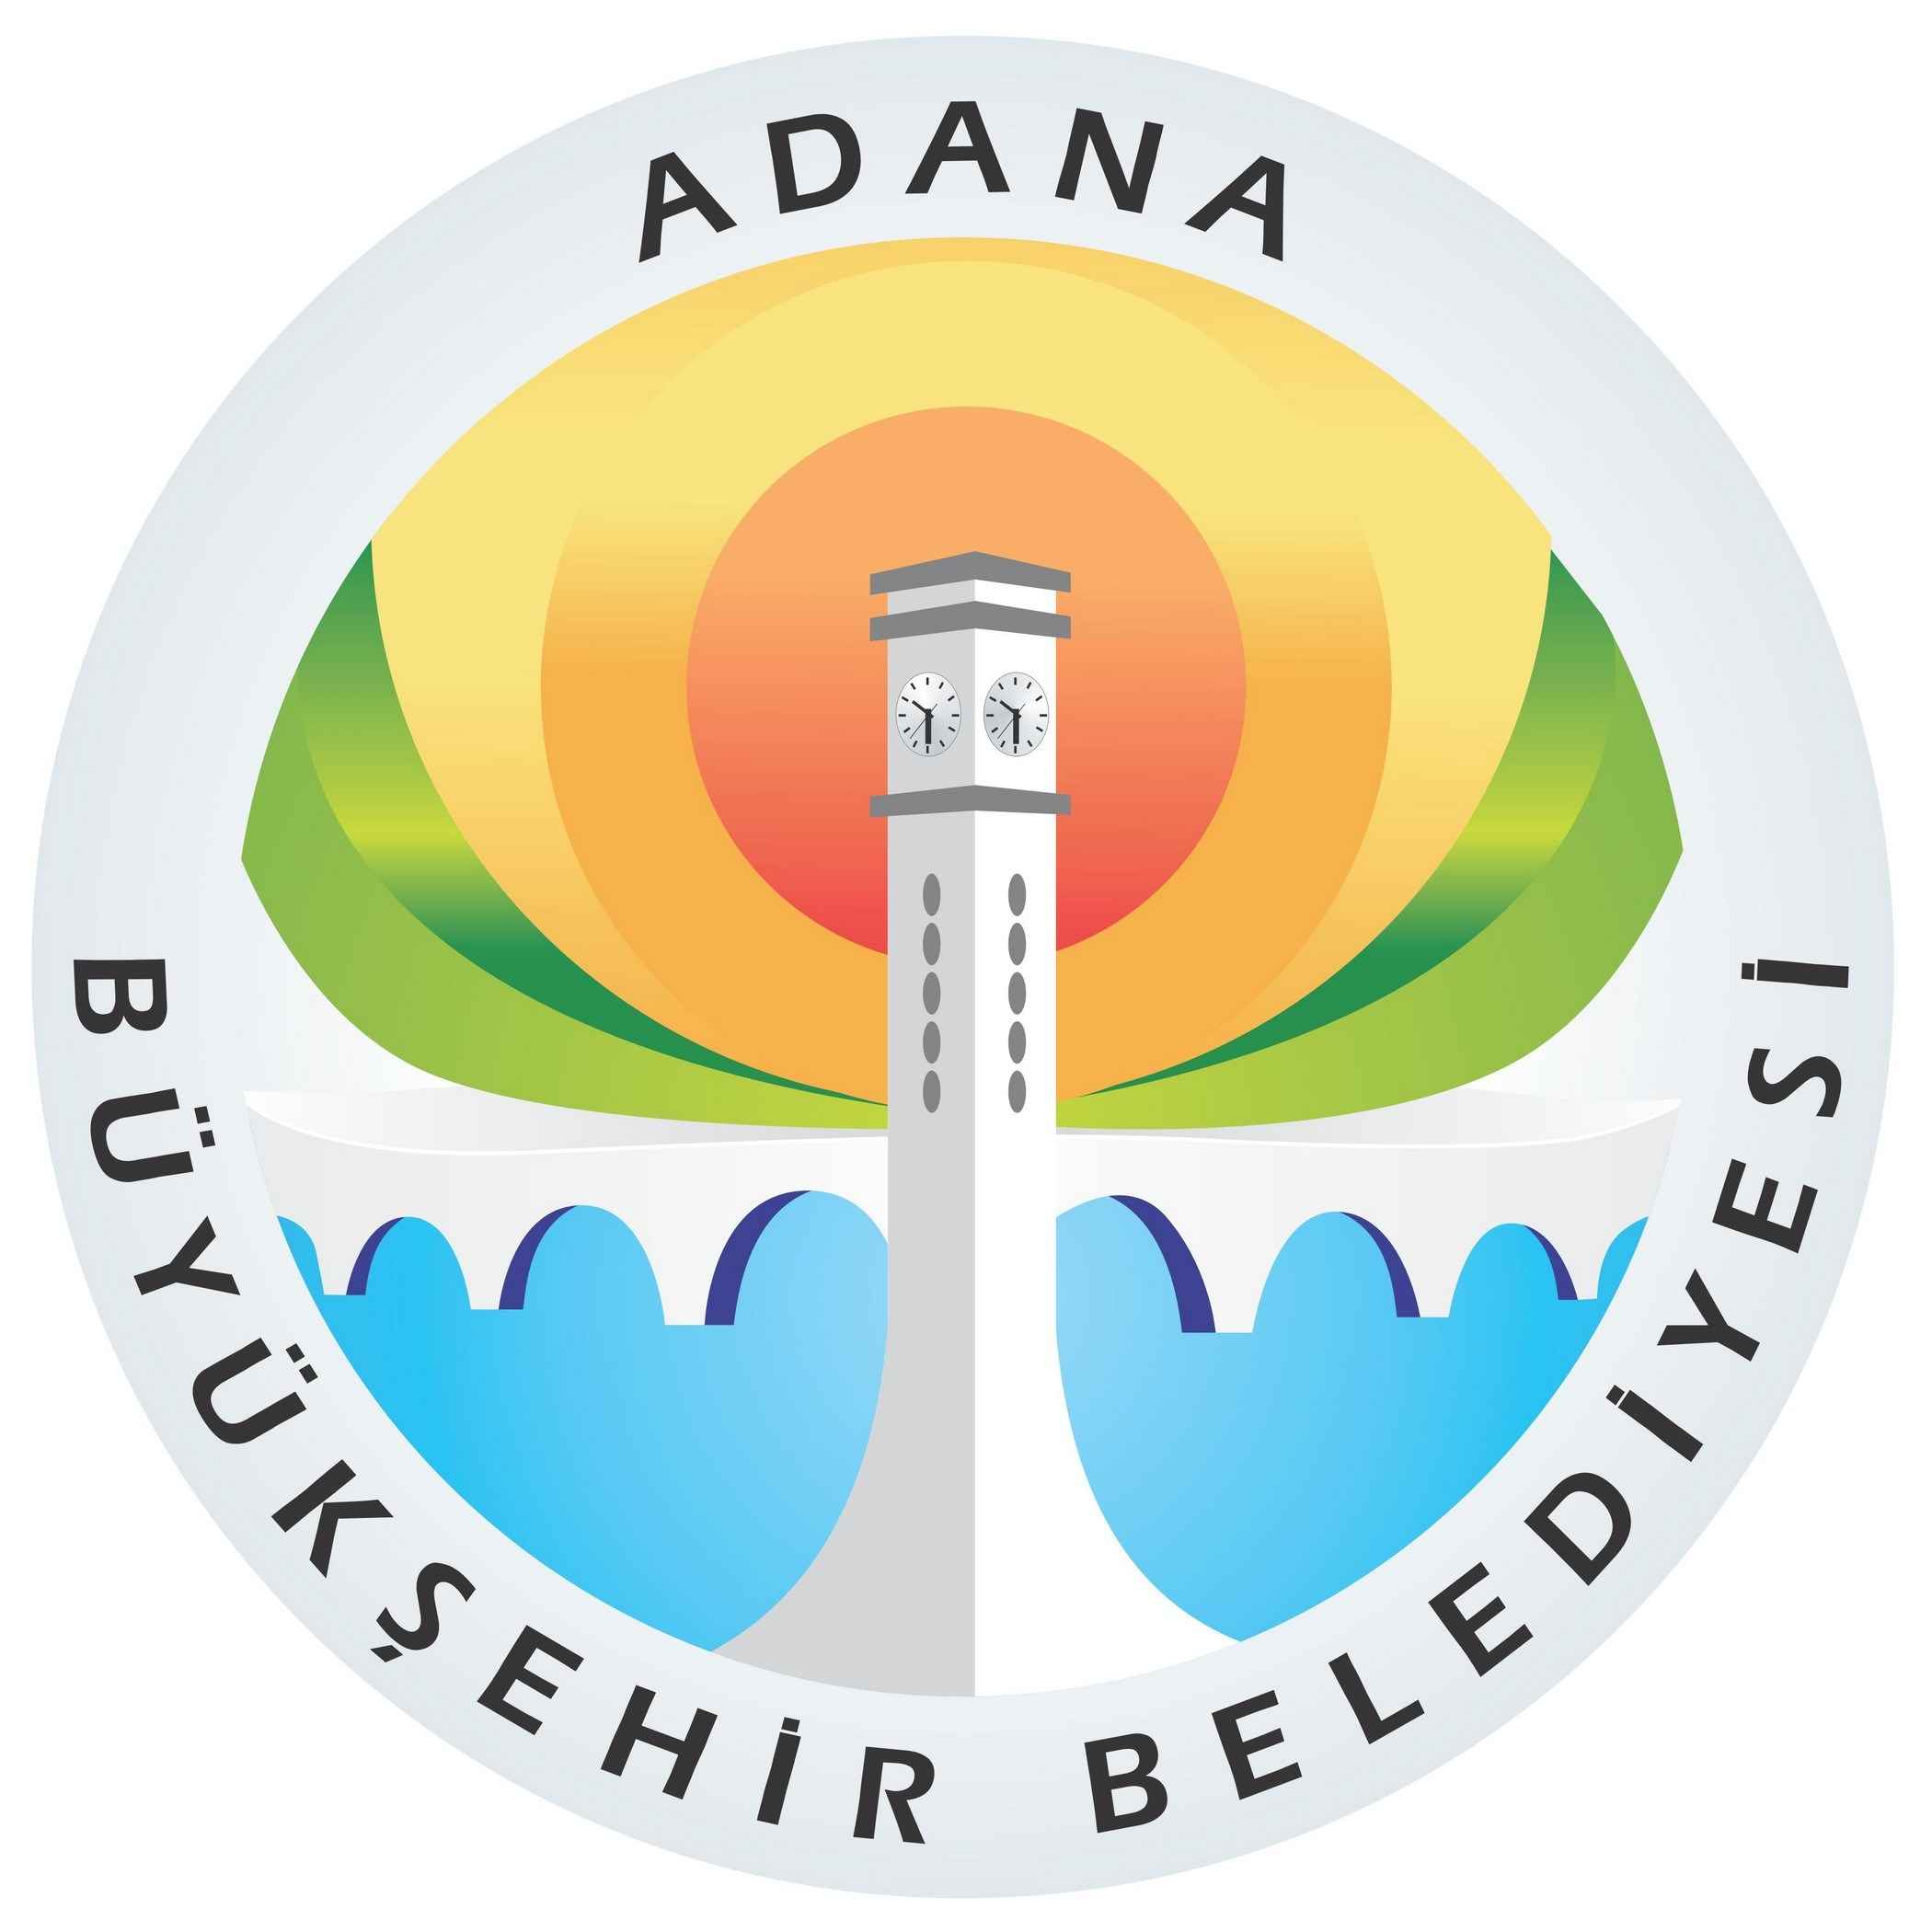 http://www.freelogovectors.net/wp-content/uploads/2013/04/adana-buyuksehir-belediyesi-logo.jpg